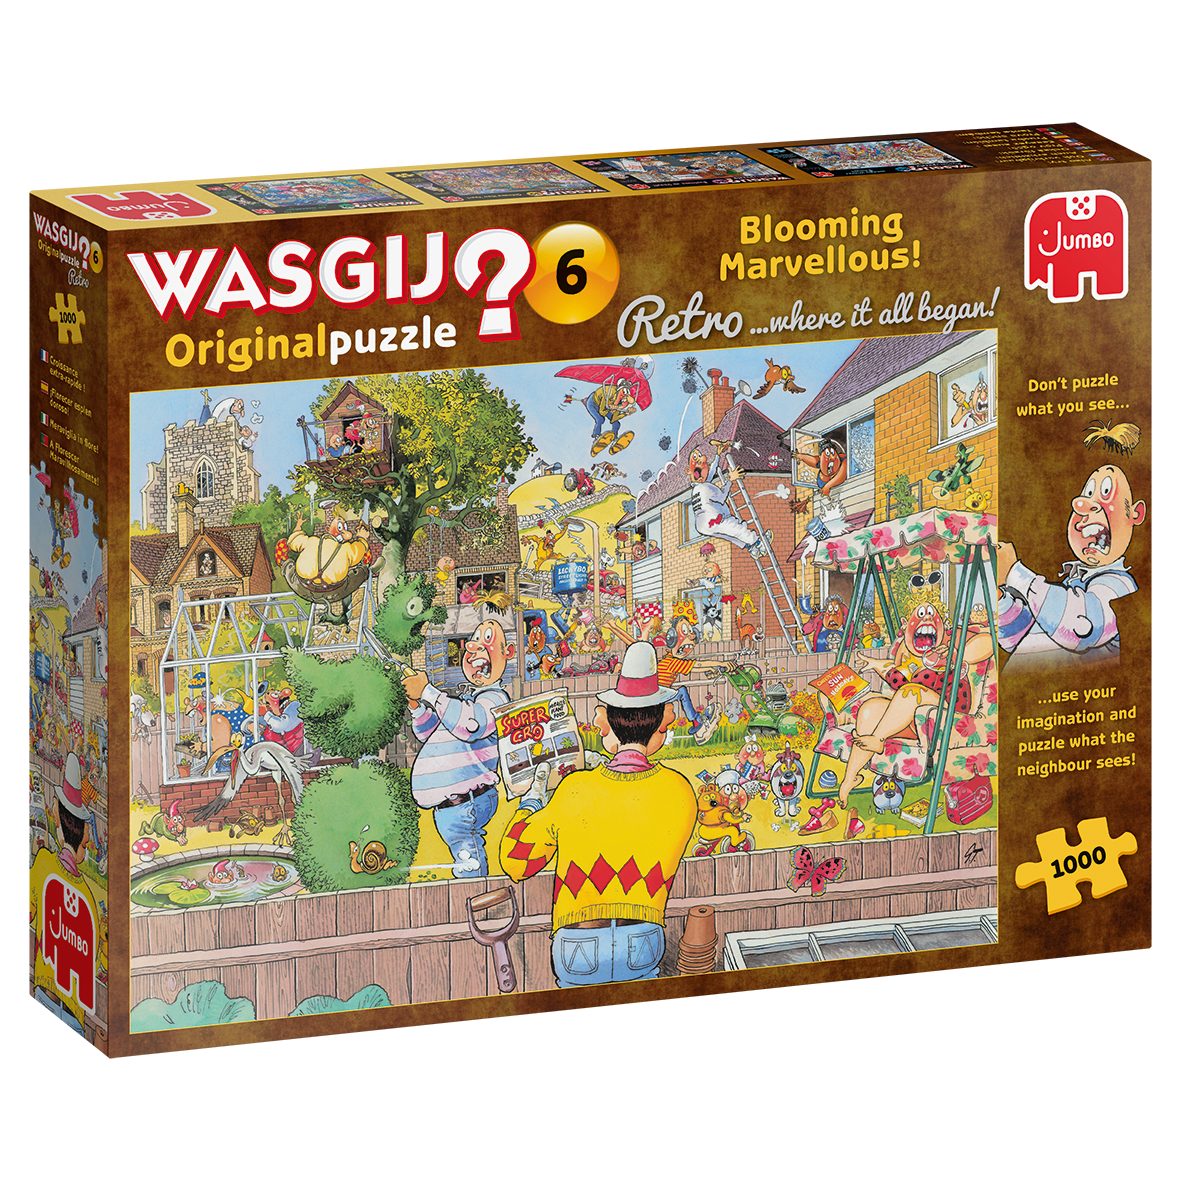 Jumbo Spiele Puzzle Wasgij Original Puzzleteile, Made Europe 1000 in Retro Gartenfreunde, 6 Große